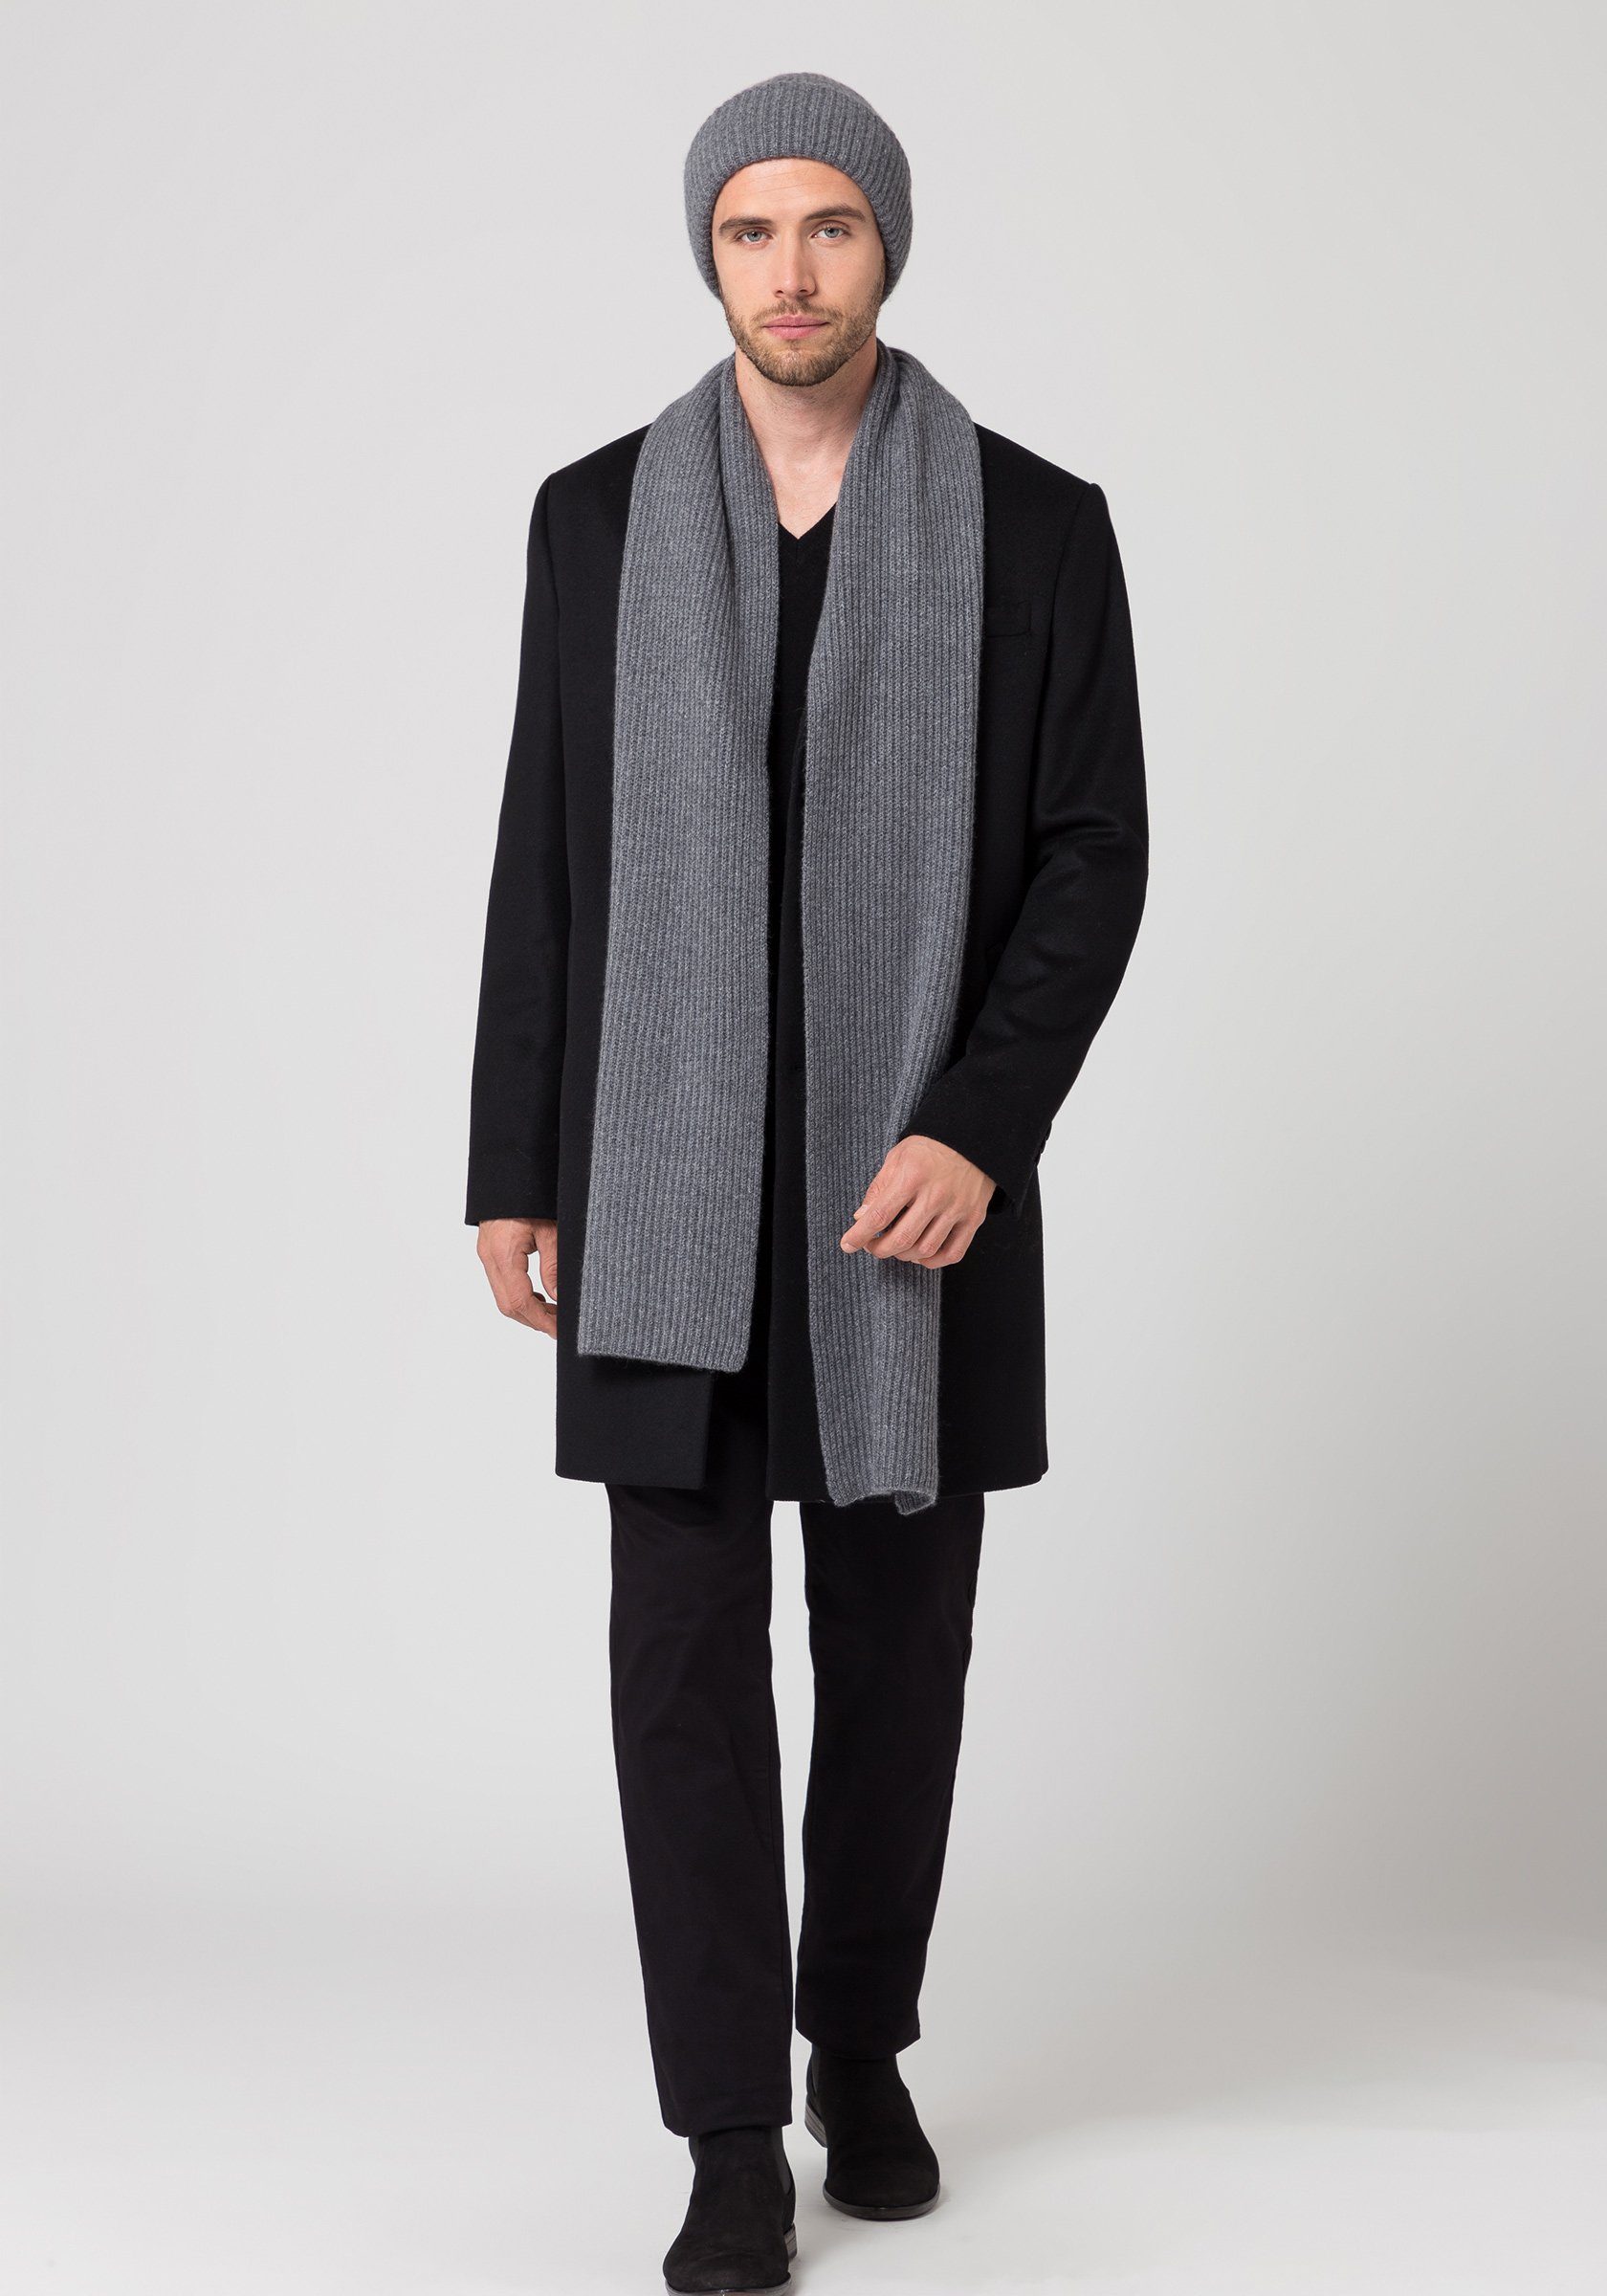 Style & Republic Kaschmirschal Schal Style Melange Herren, Republic Gerippter Grey gerippt